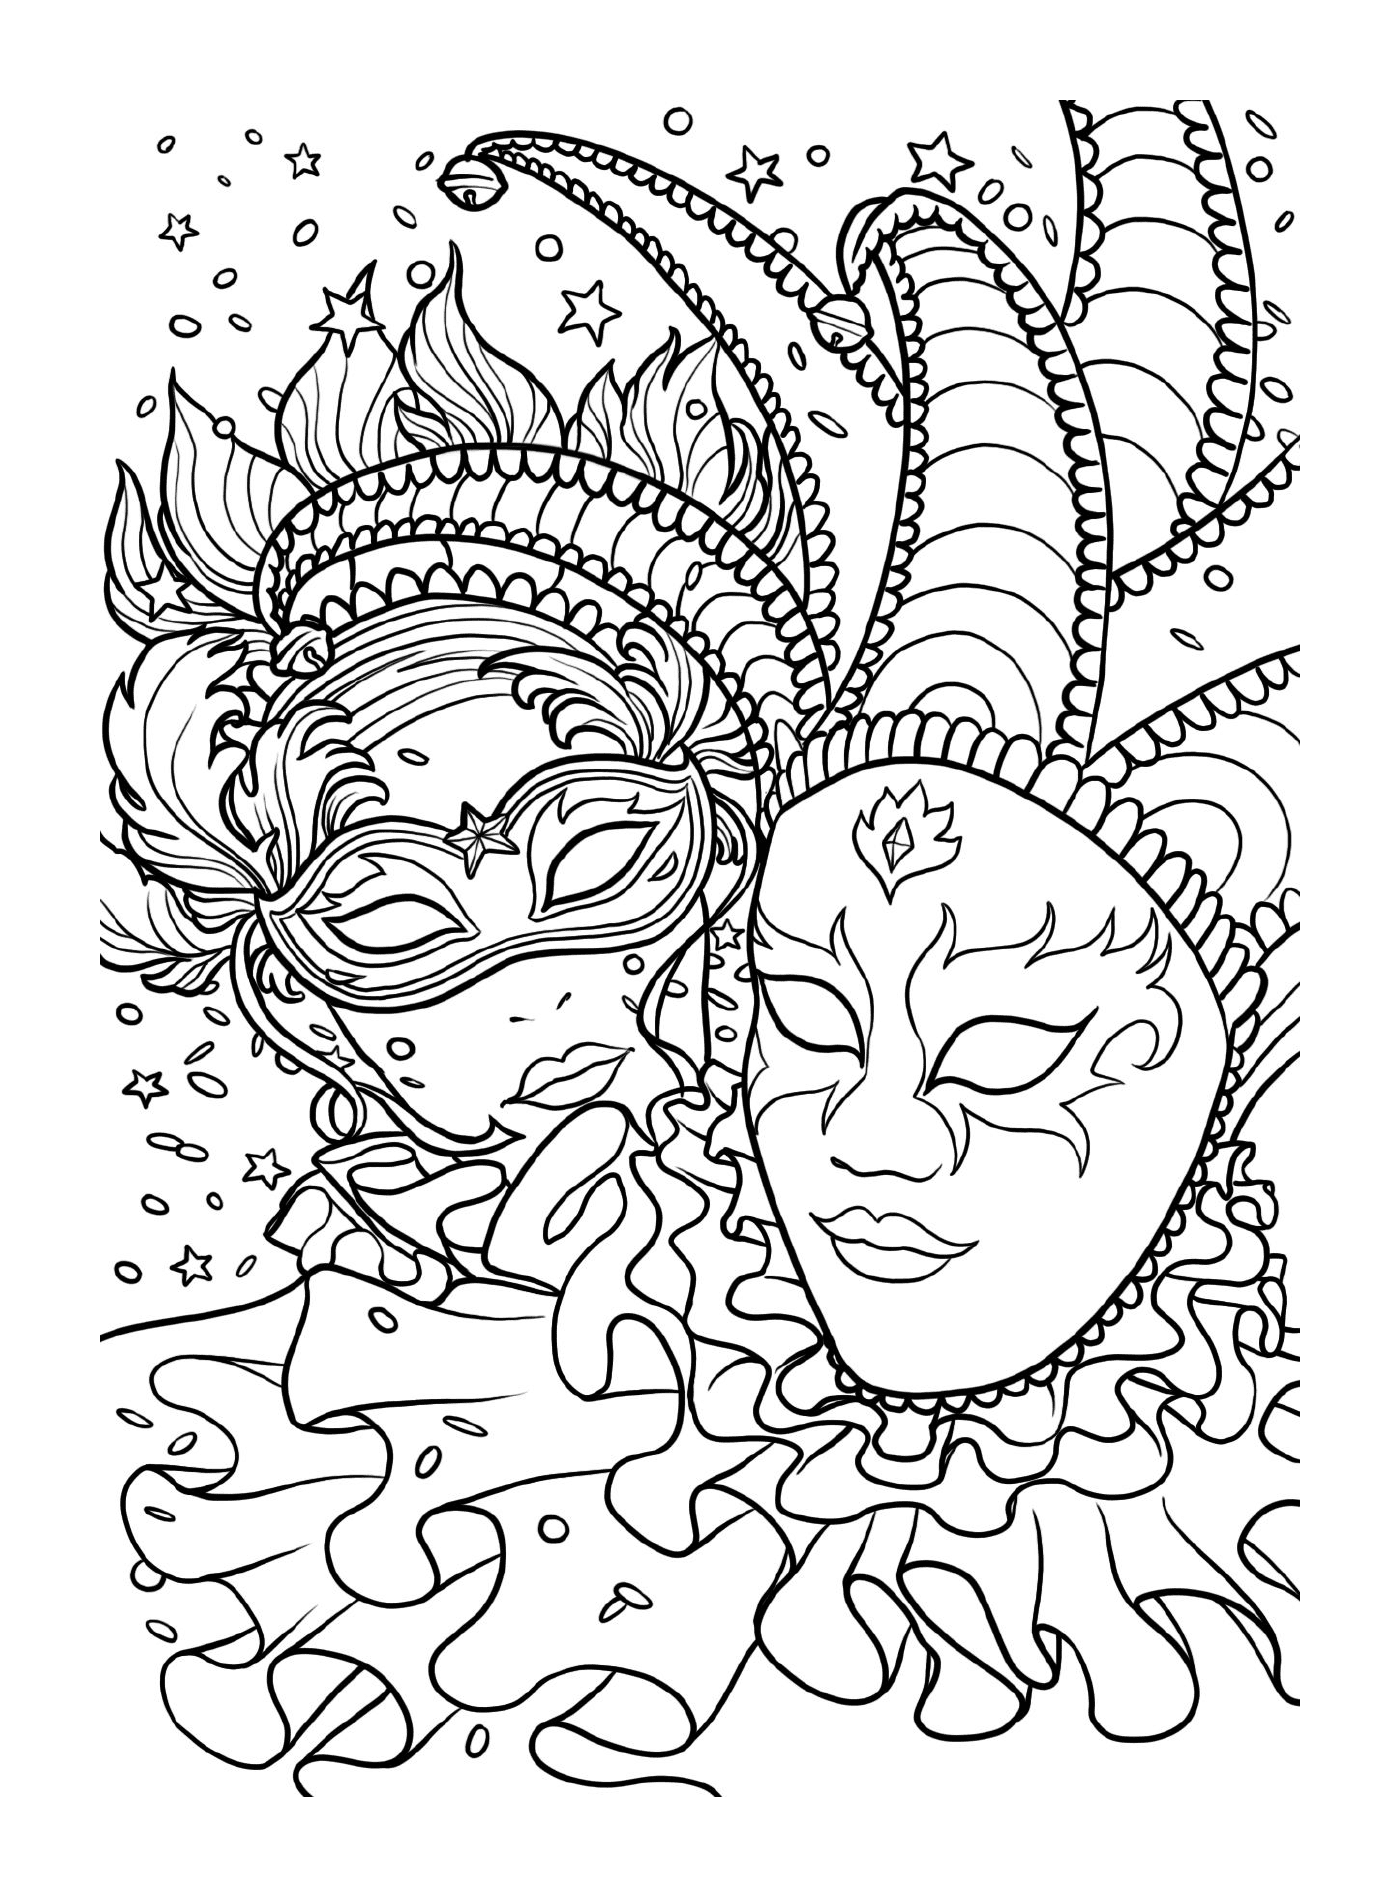  Carnival masks, couple of people wearing masks 